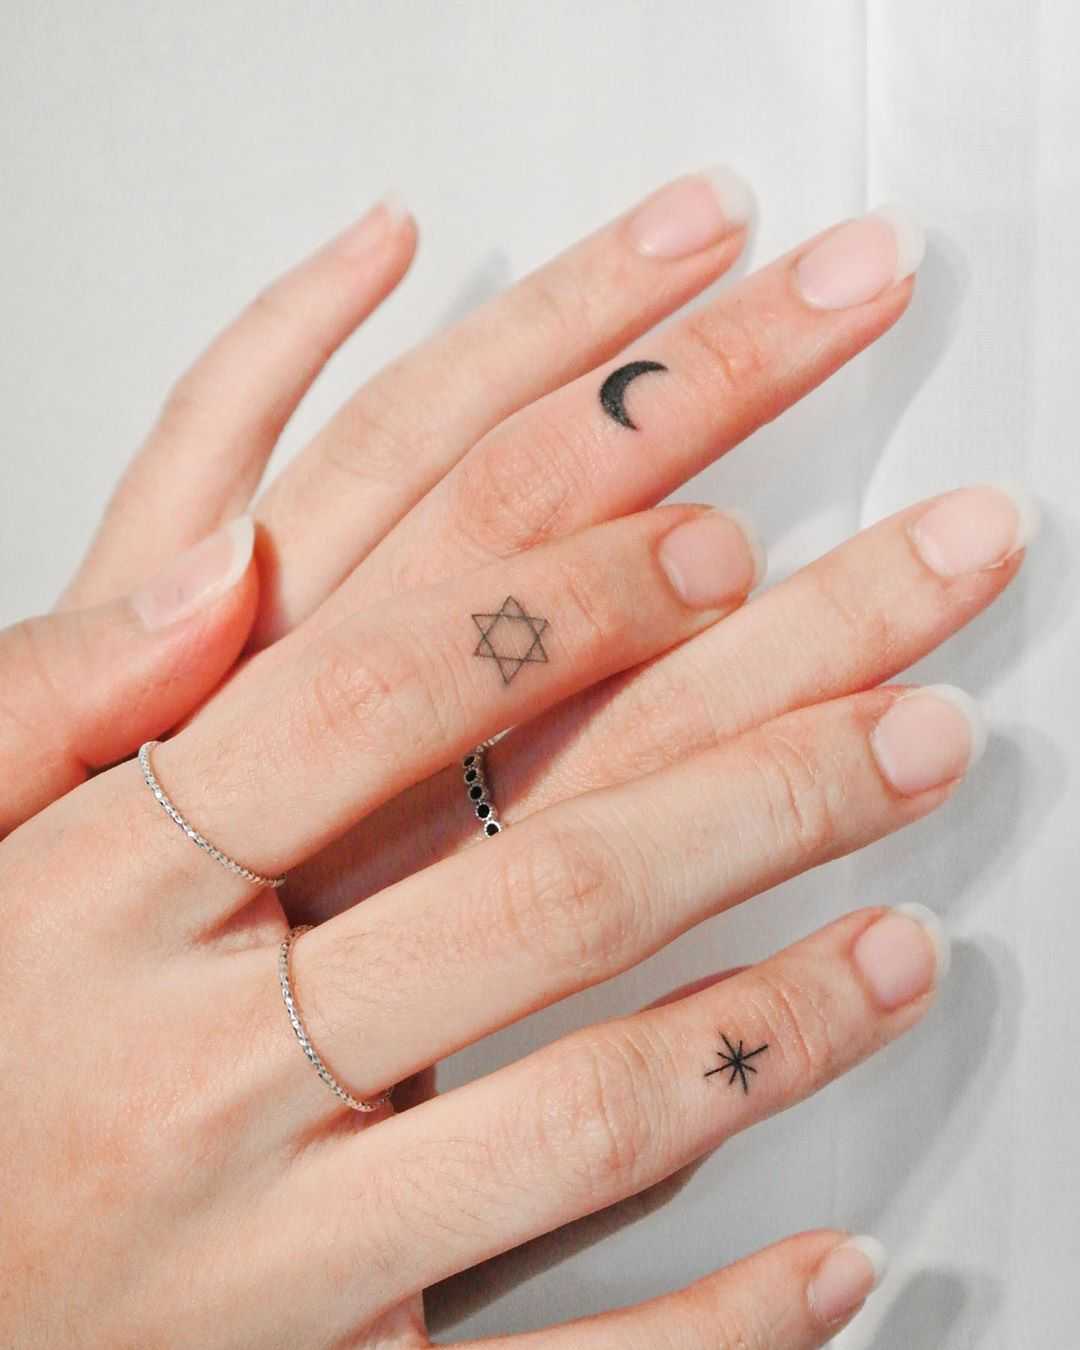 Tiny stars and moon by tattooist Cozy